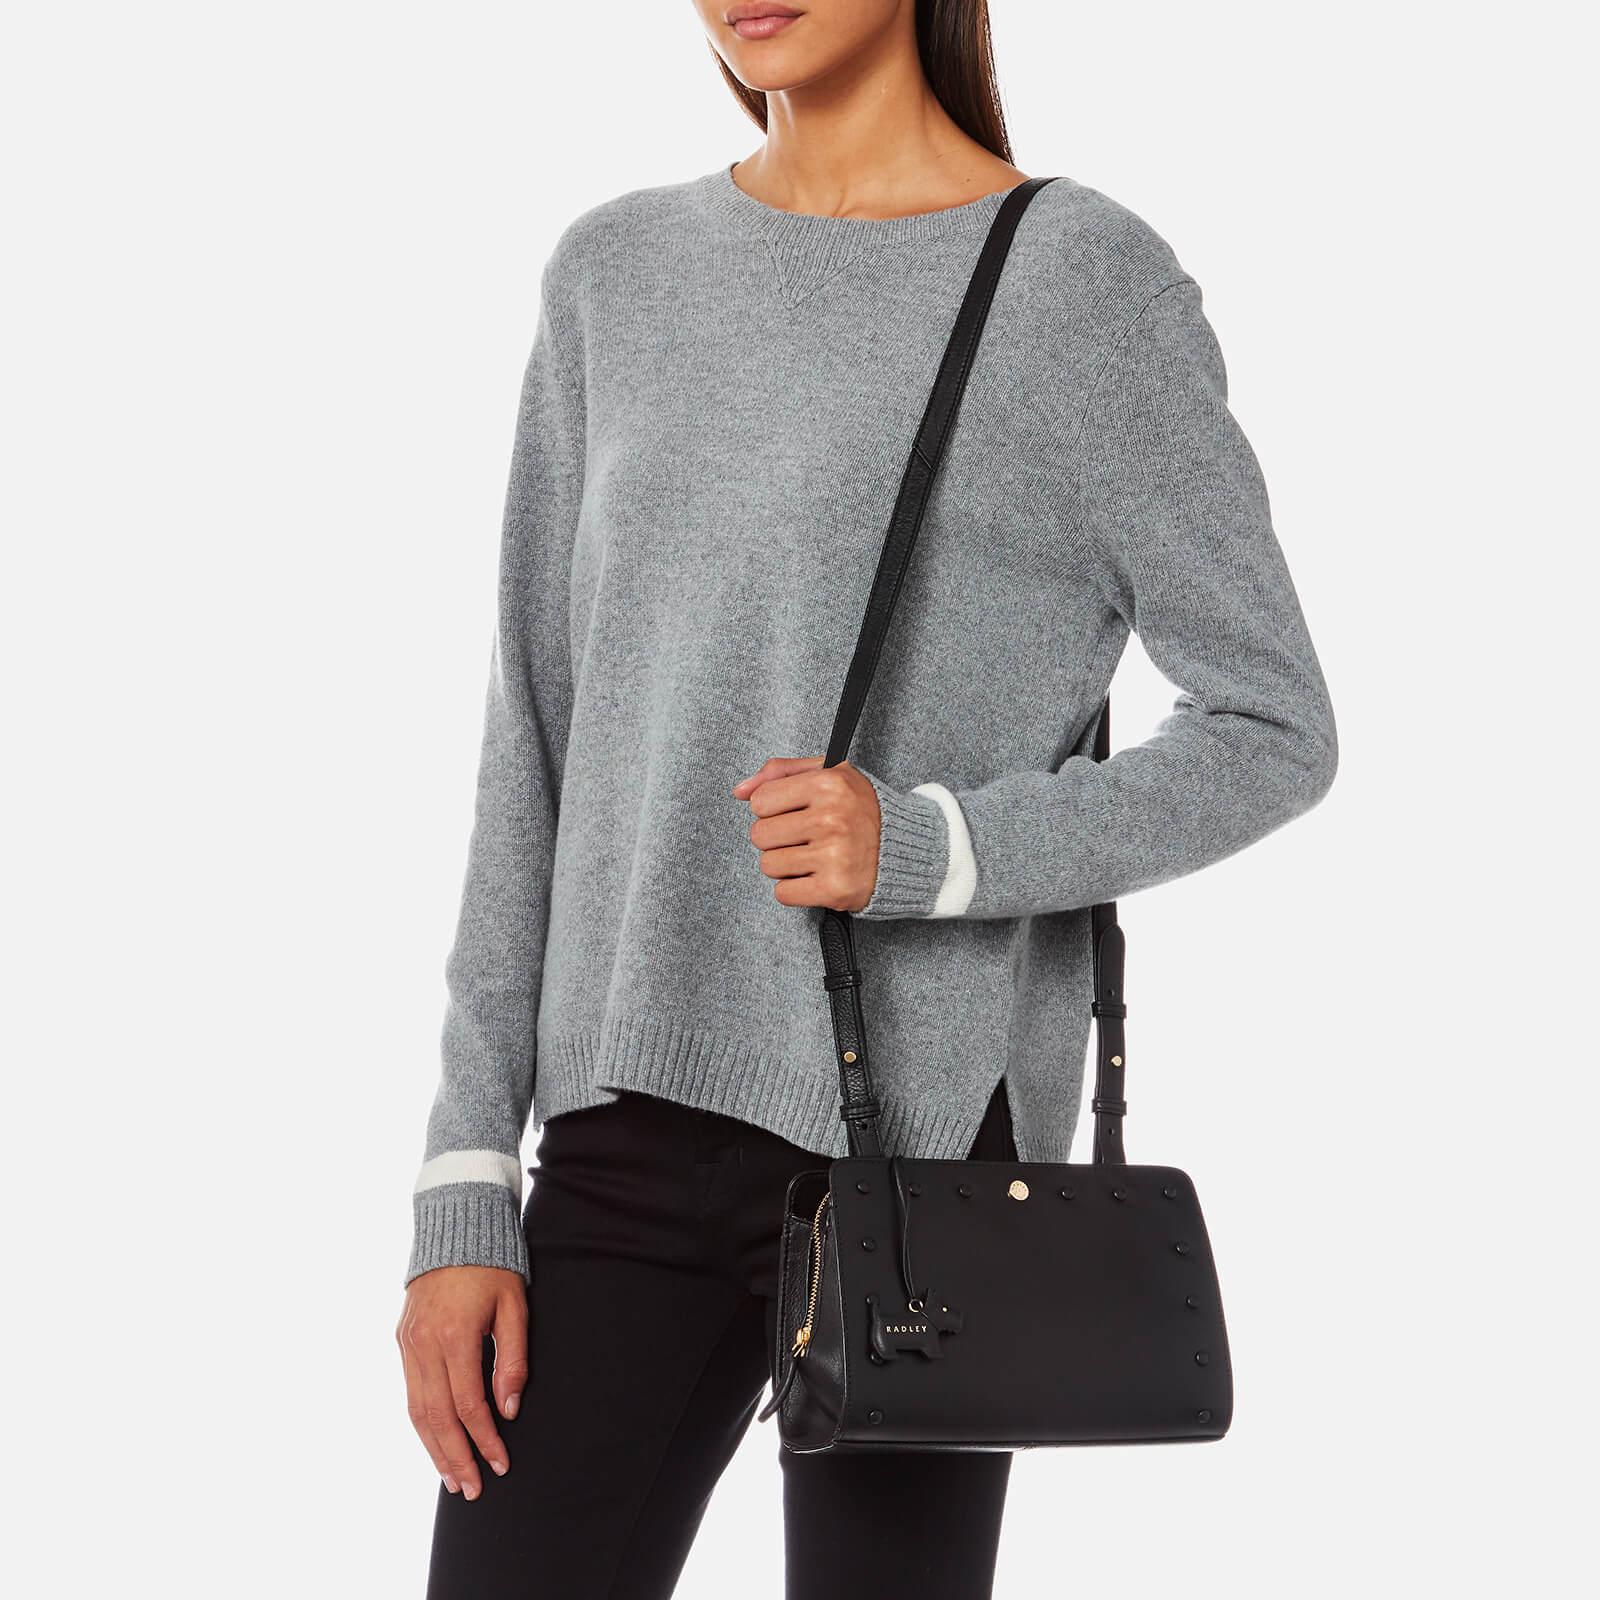 RADLEY London Liverpool Street Medium Zip-Top Shoulder Bag: :  Fashion